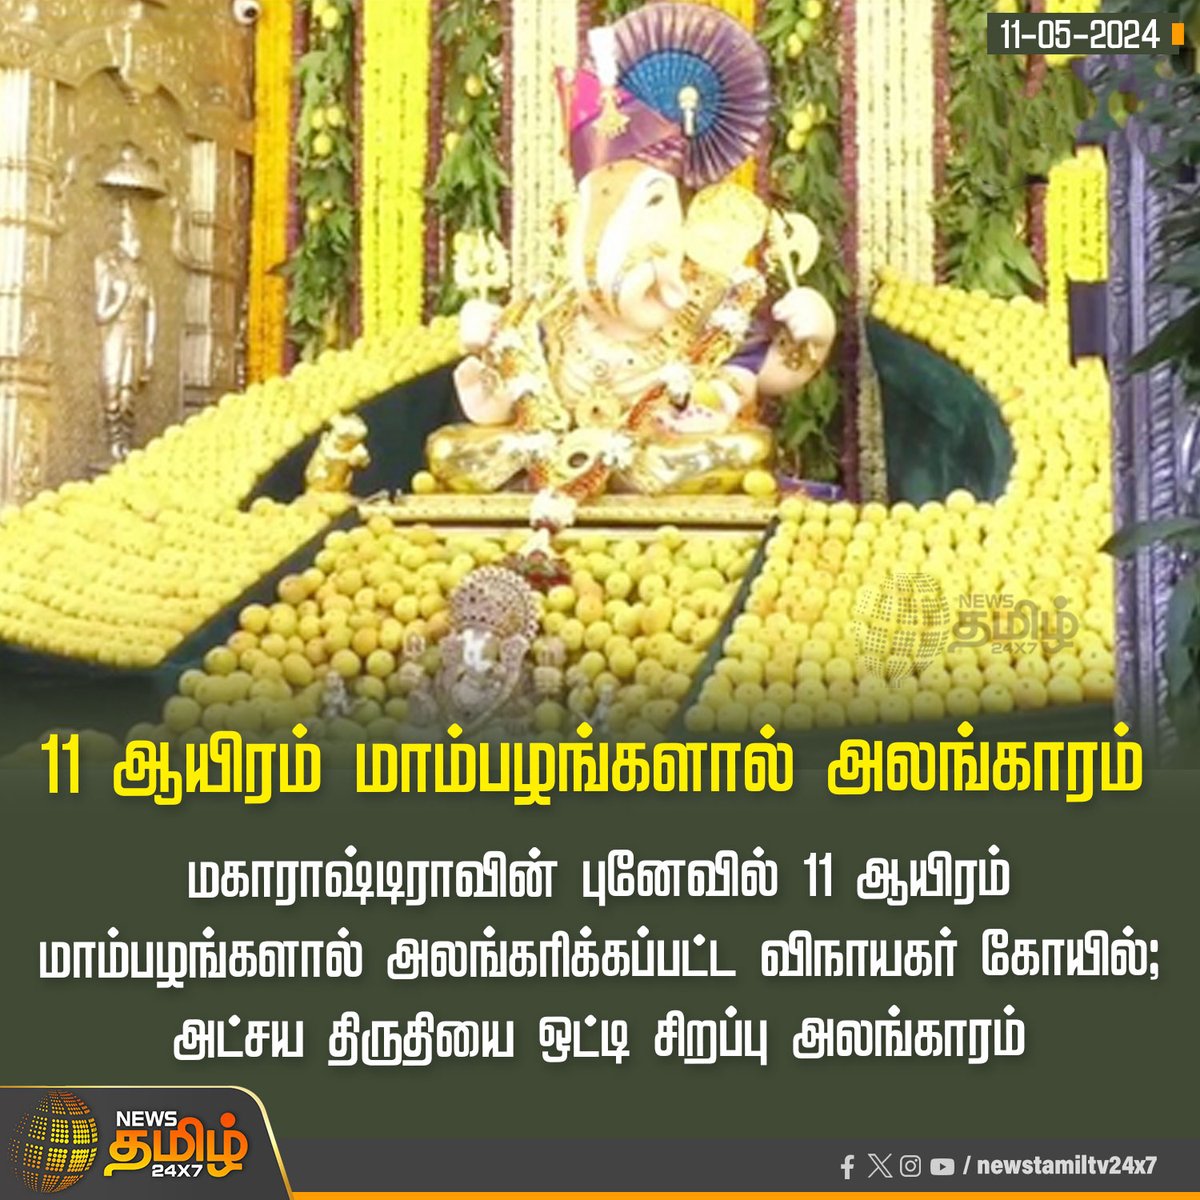 #NewsUpdate | 11 ஆயிரம் மாம்பழங்களால் அலங்காரம்

Click Link: bit.ly/3TLWHxa

#NewsTamil24x7 | #Maharashtra | #Mango_Decoration| #Vinayagar_Temple | #AkshayaTritiya2024